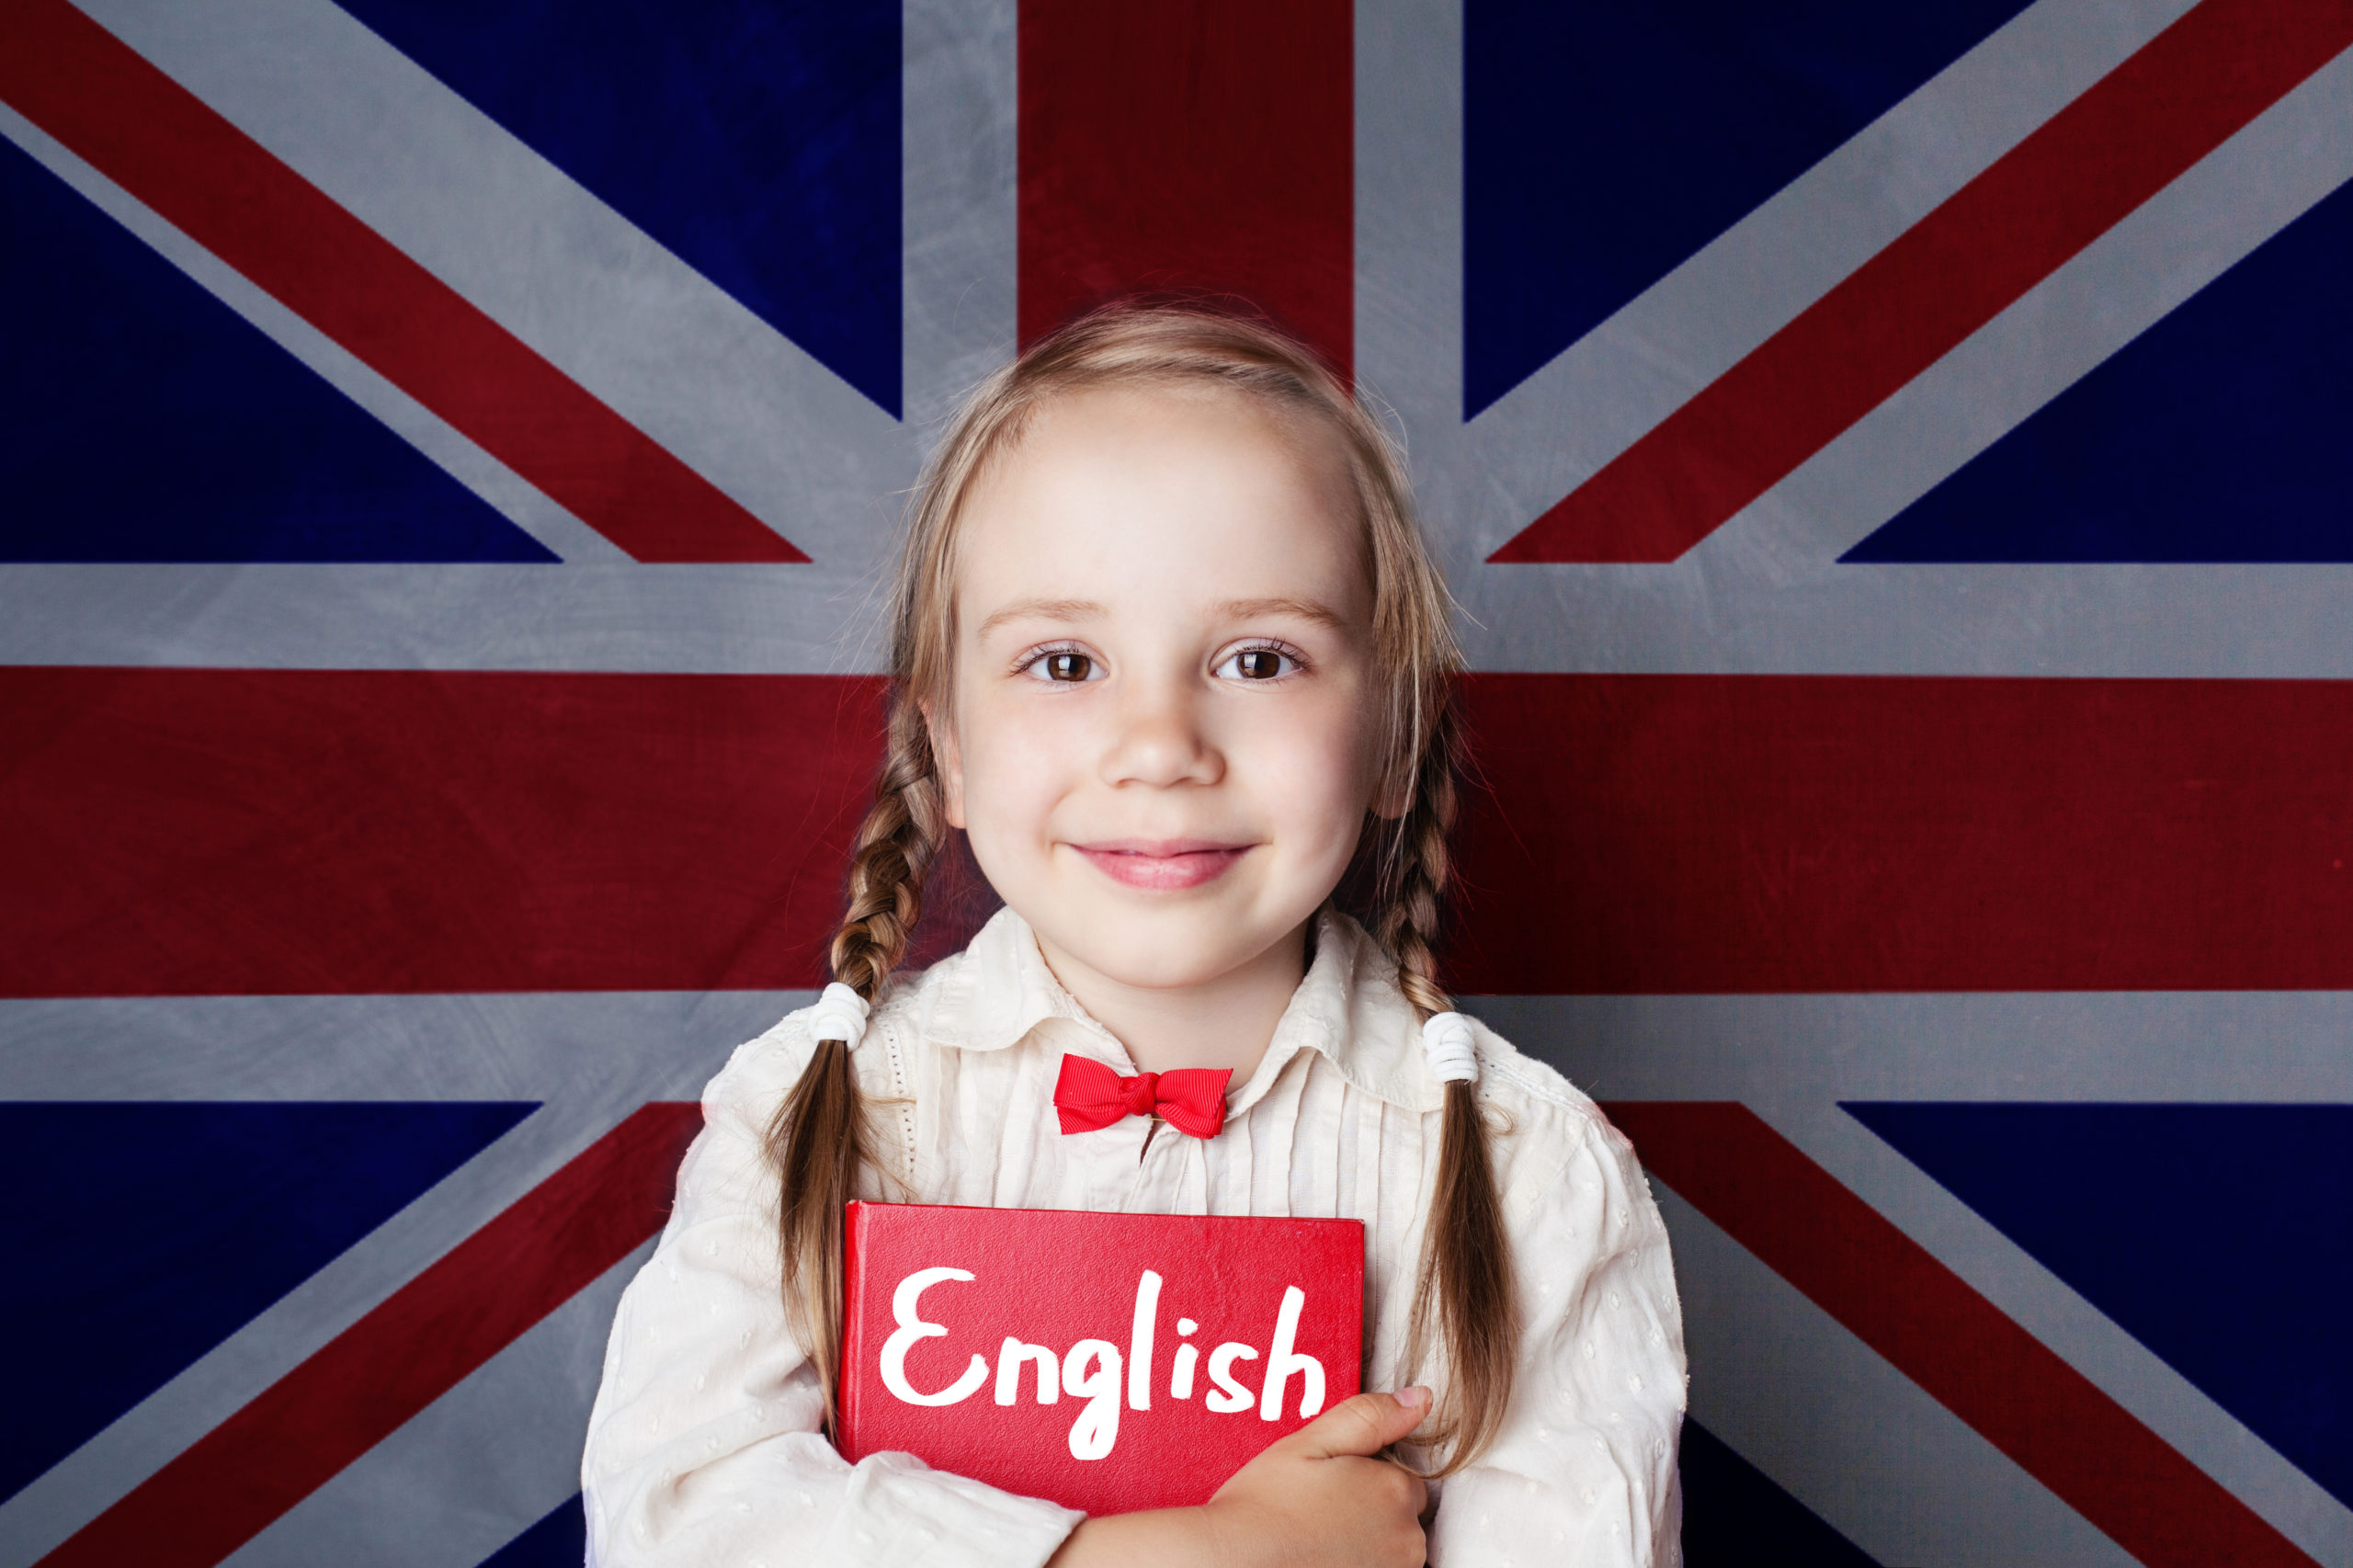 Английский ребенок россия. Английский для детей. Английский язык для детей. Ребенок с британским флагом. Ребенок с английским флагом.